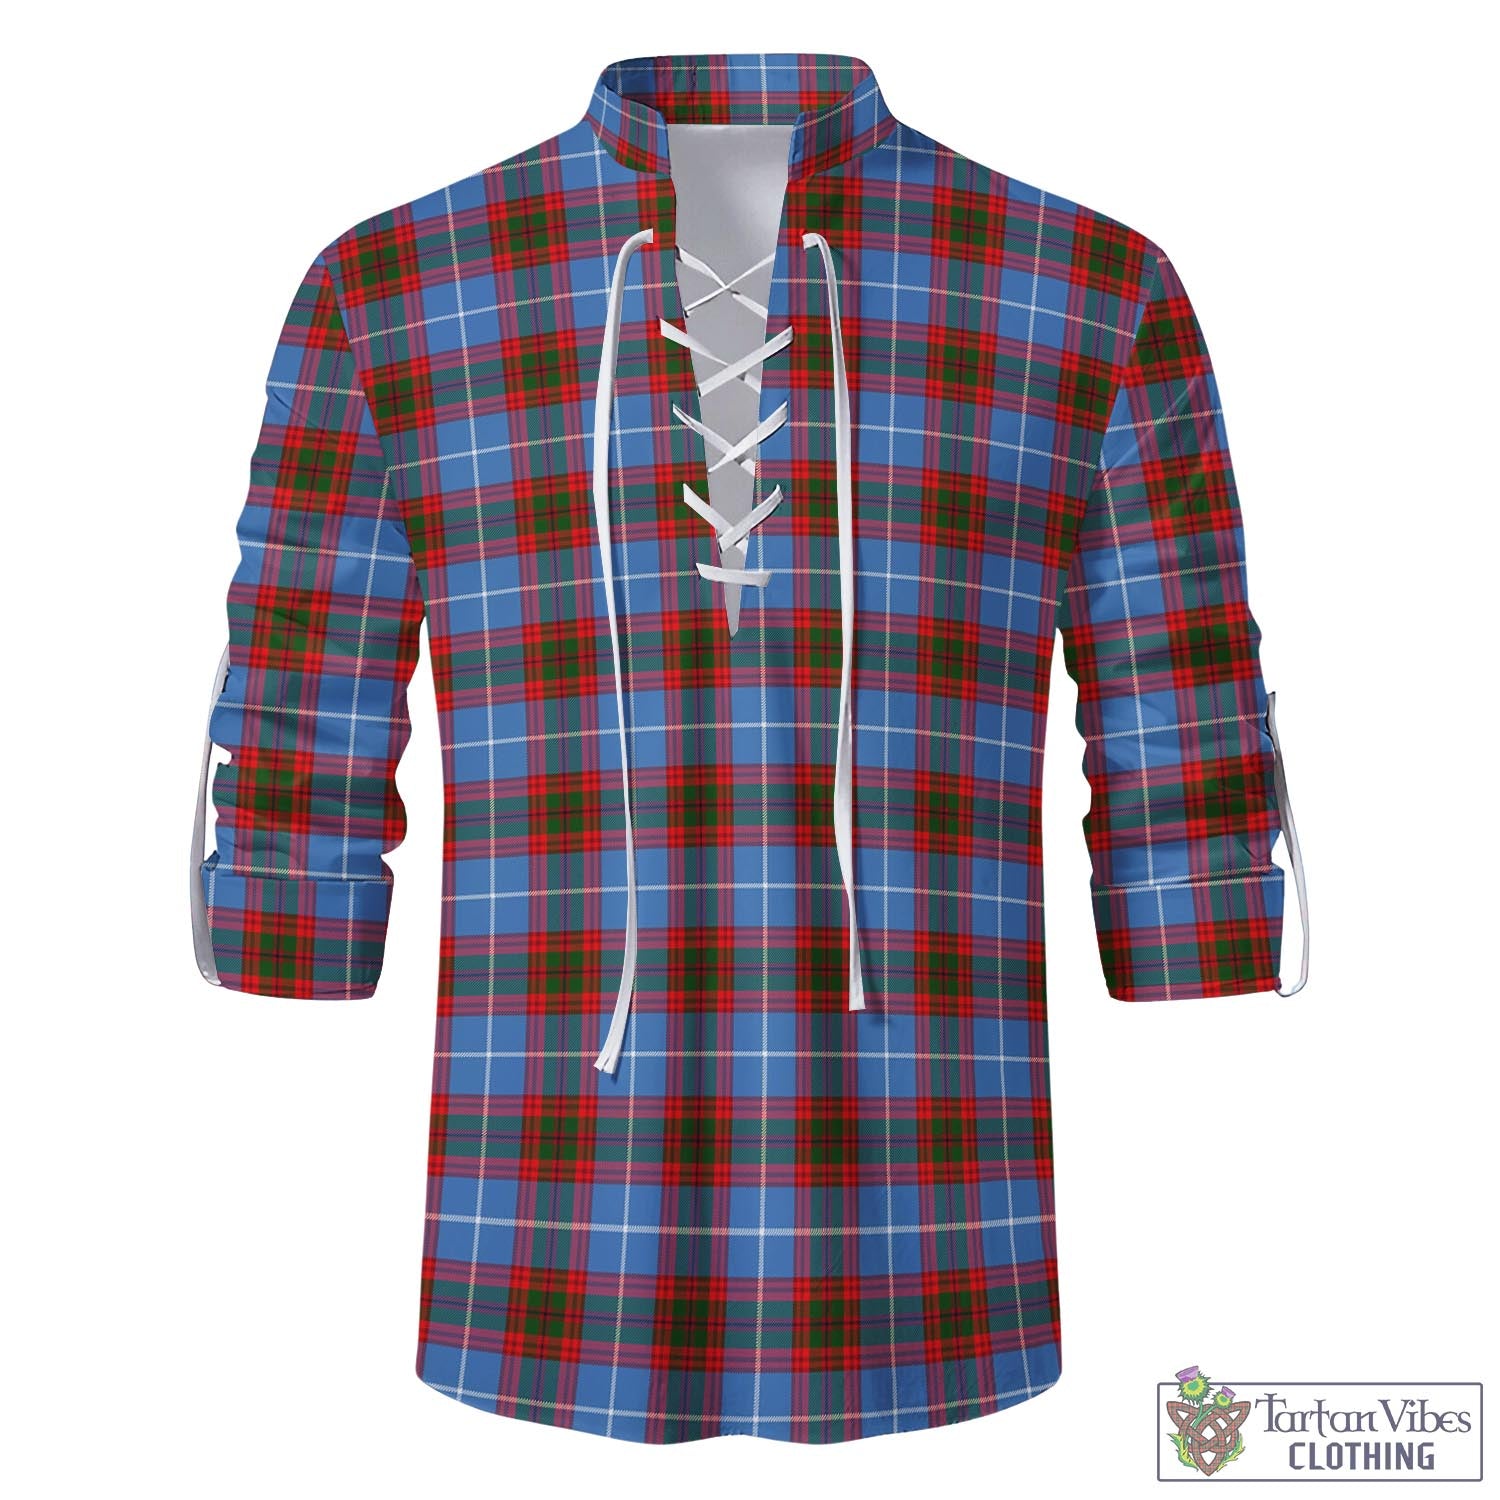 Tartan Vibes Clothing Crichton Tartan Men's Scottish Traditional Jacobite Ghillie Kilt Shirt